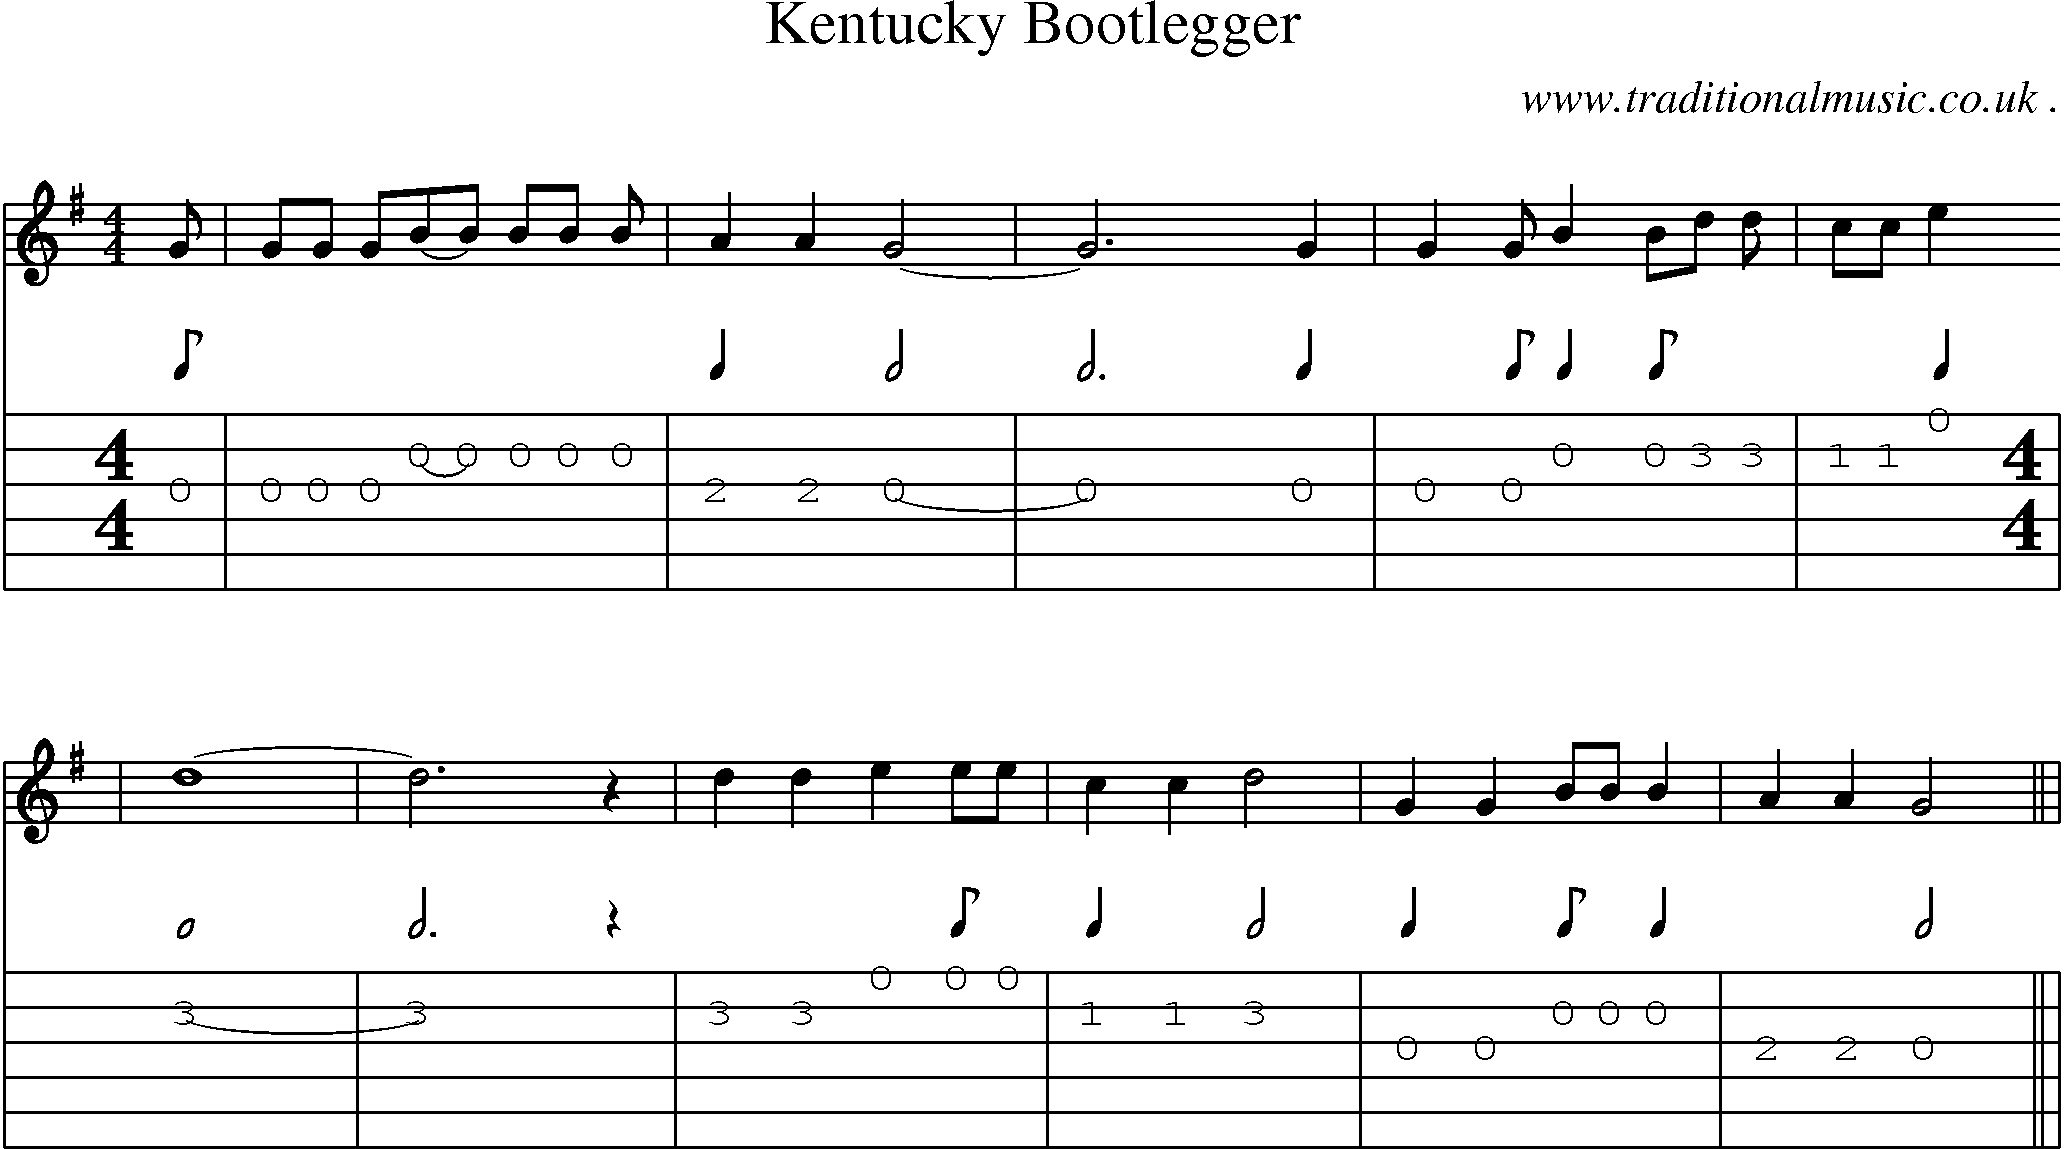 Music Score and Guitar Tabs for Kentucky Bootlegger